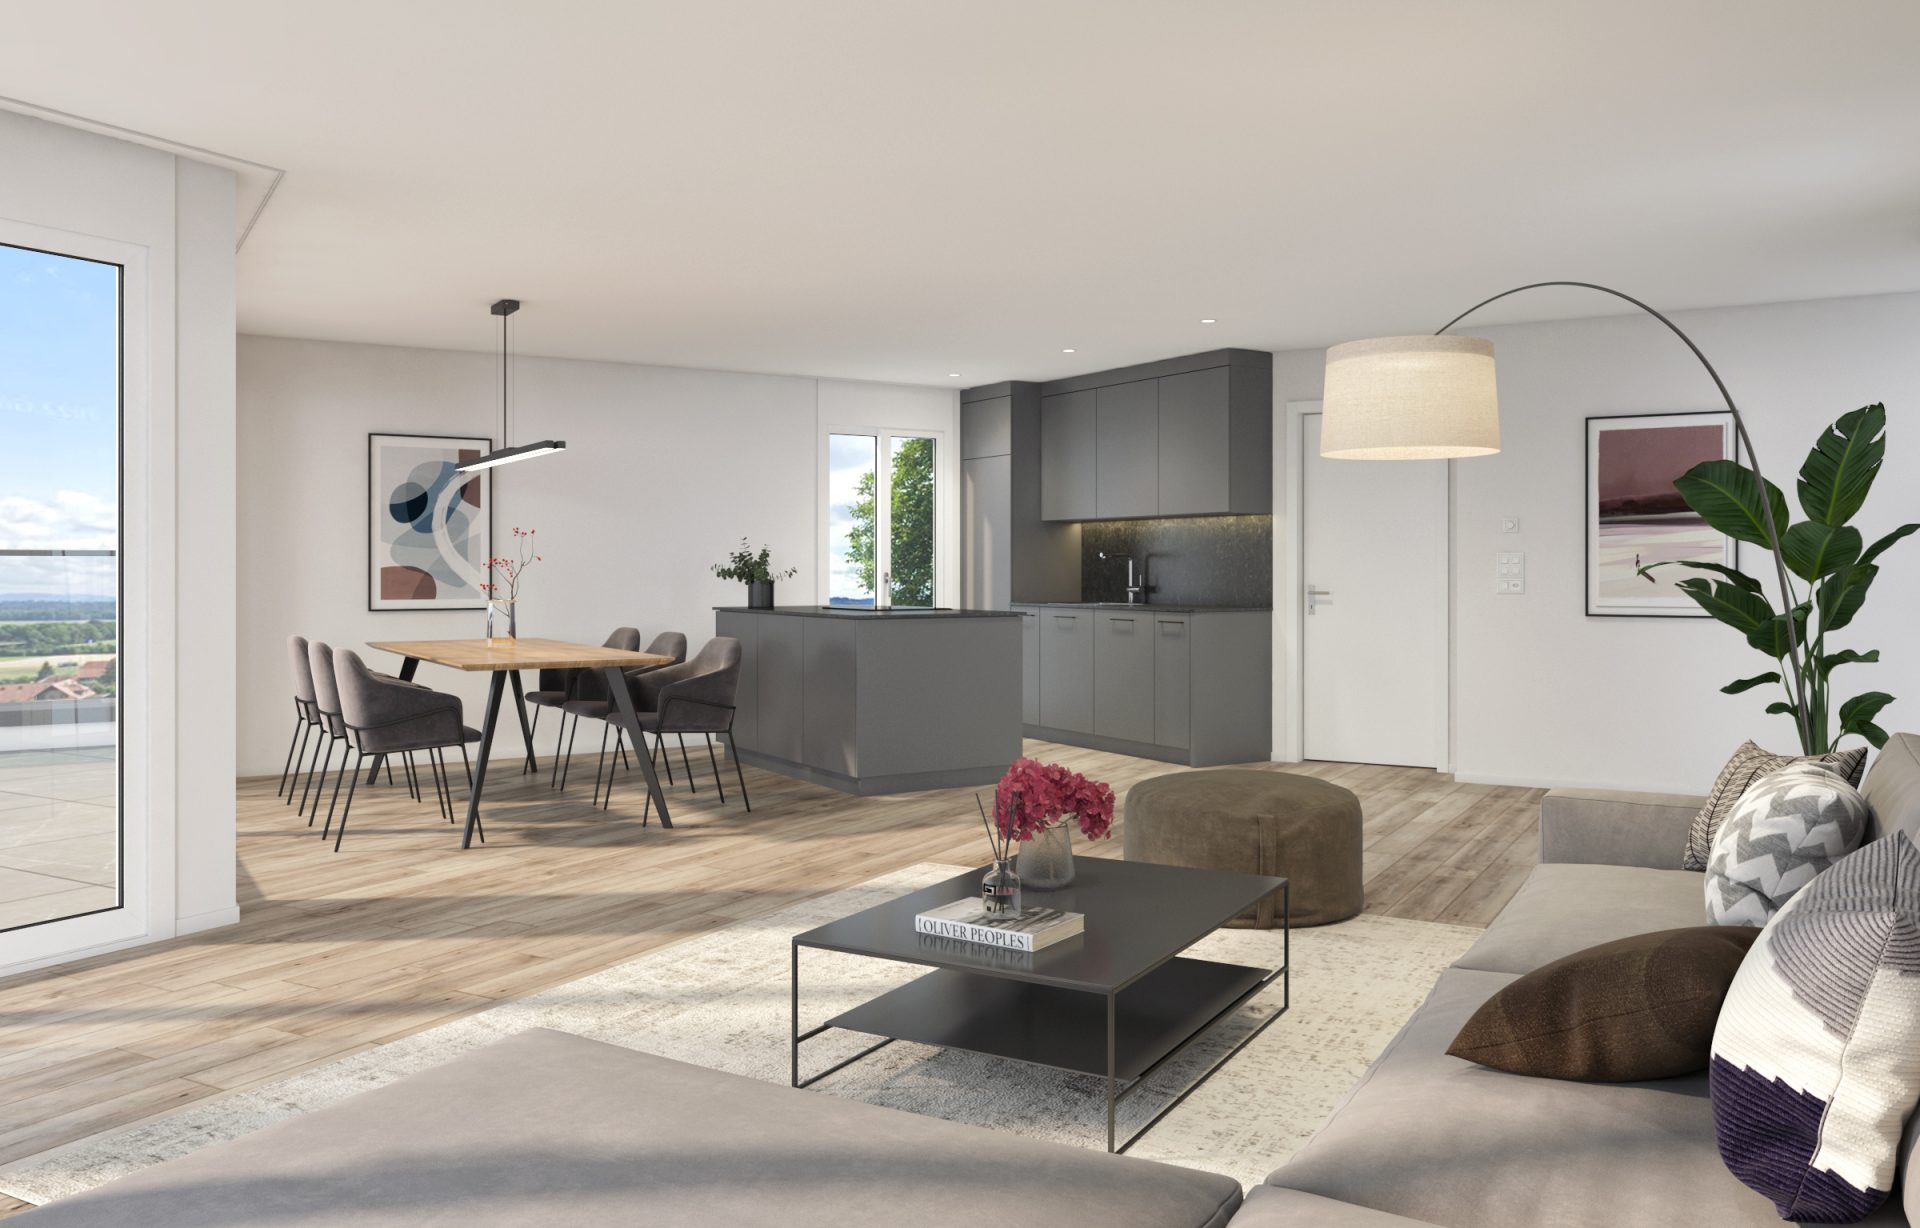 3D Visualisierung Immobilienprojekt - Innenvisualisierung / Mehrfamilienhaus Oensingen, Kanton Solothurn - AVOO DESIGN Solothurn, Schweiz